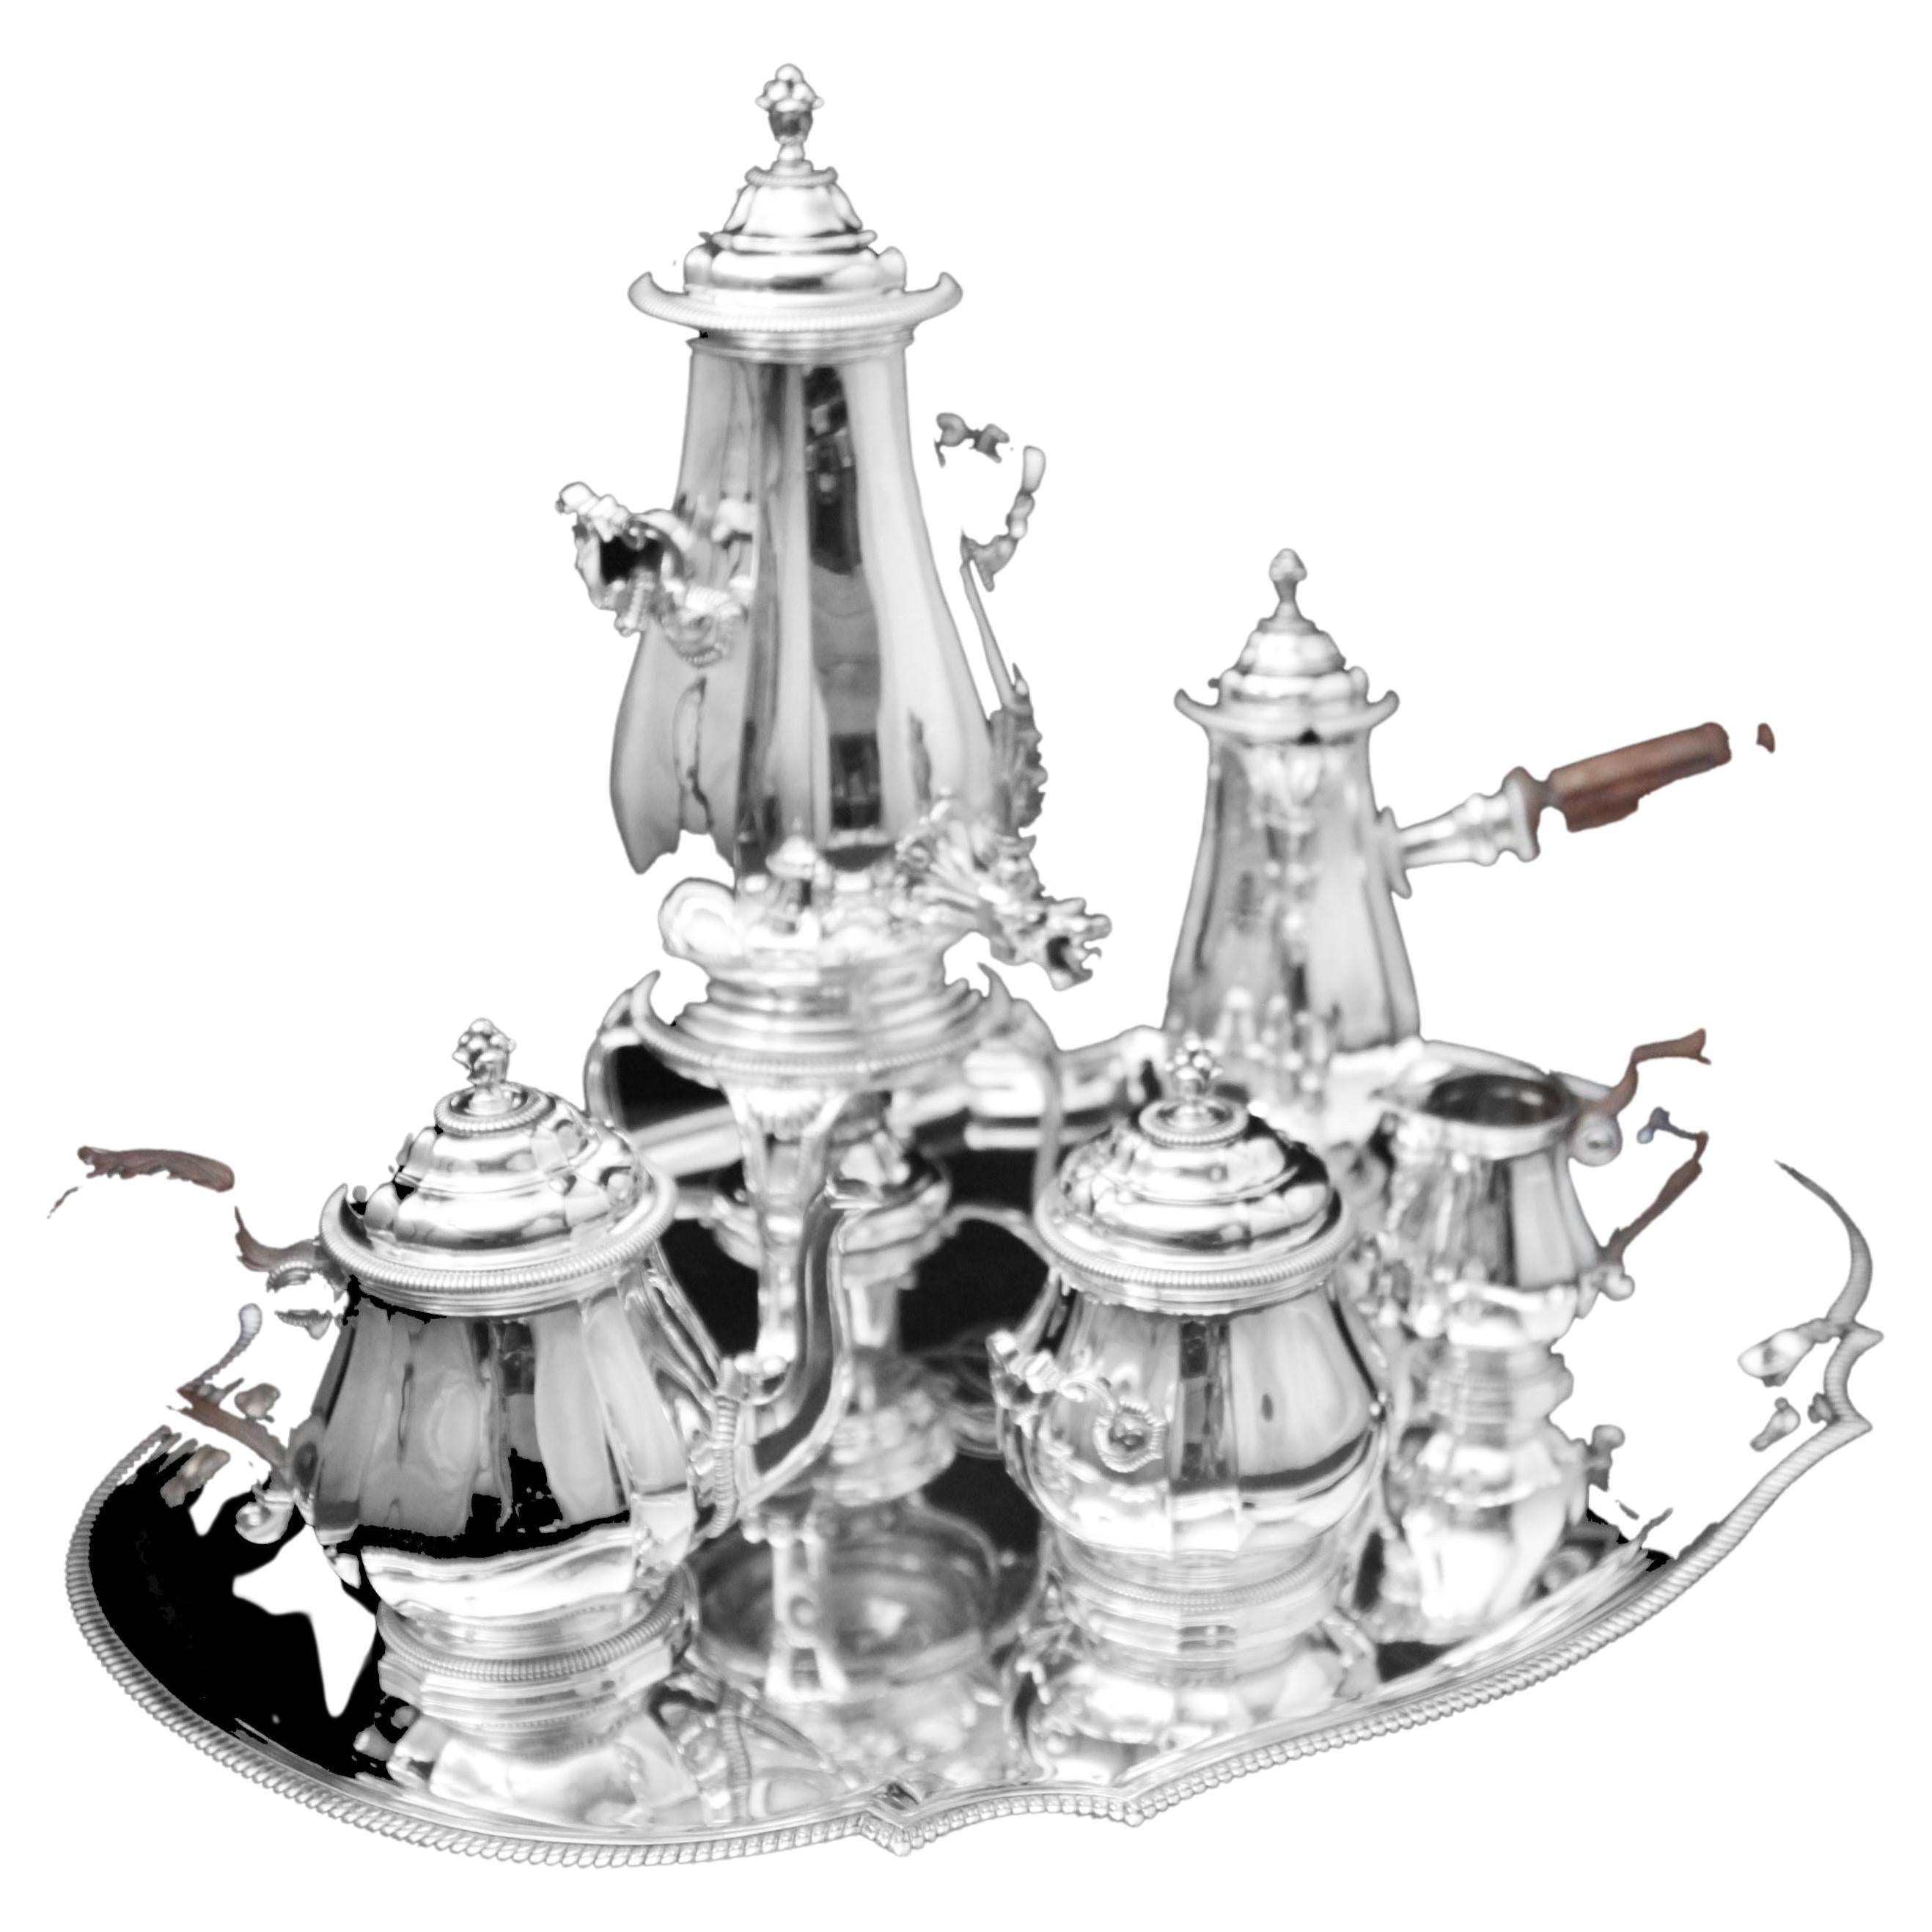 Boin-Taburet Tea Sets